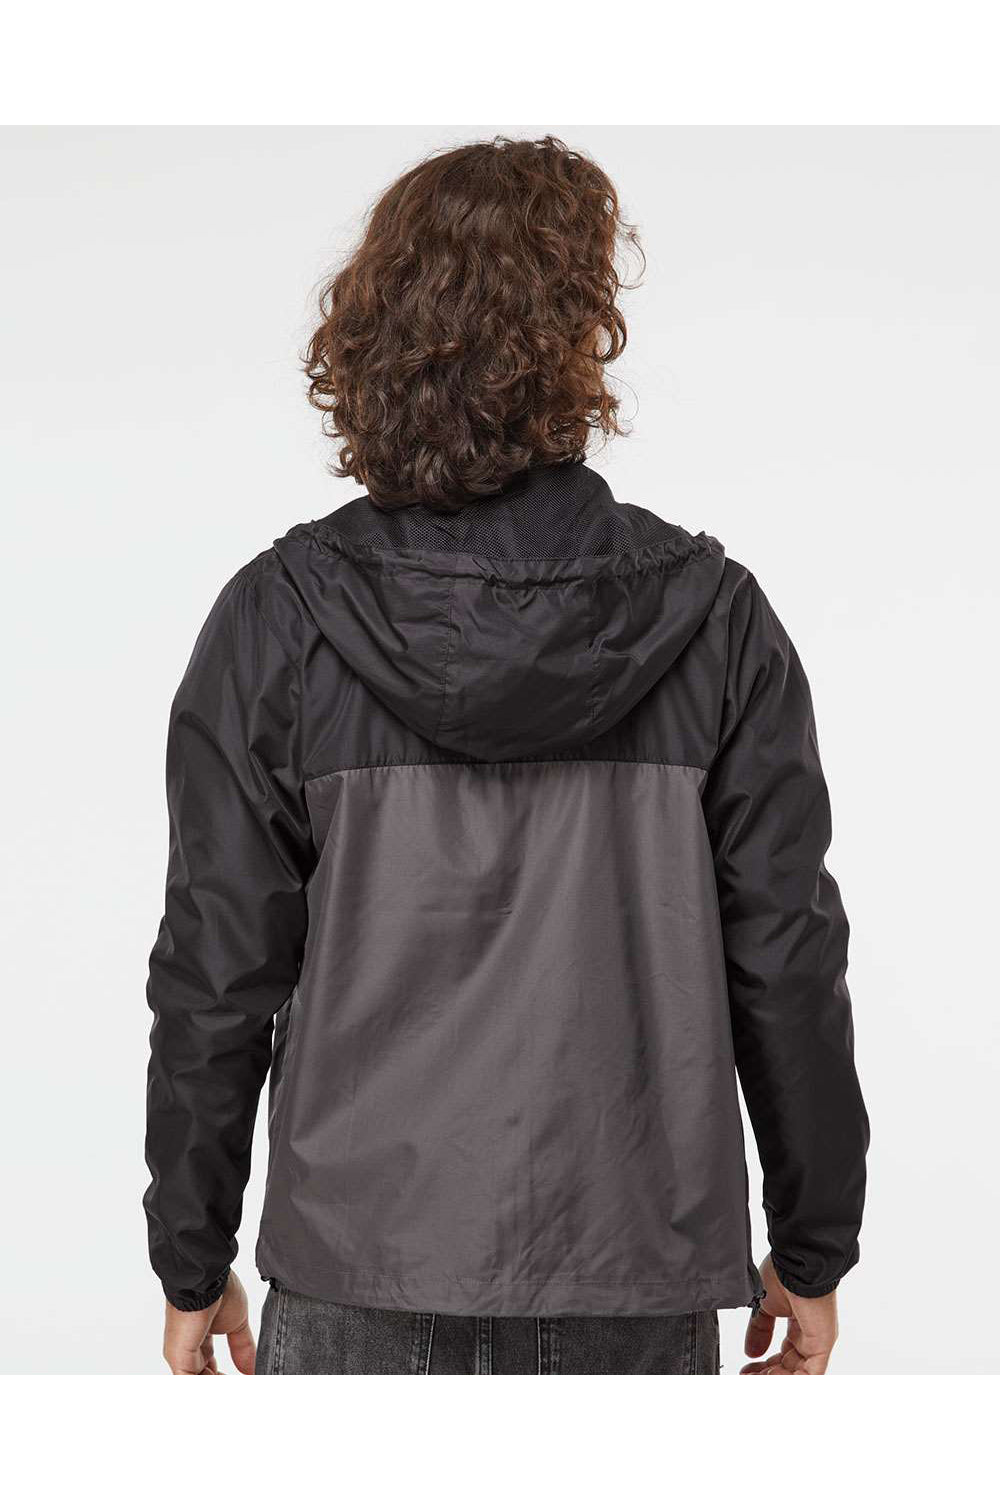 Independent Trading Co. EXP54LWZ Mens Full Zip Windbreaker Hooded Jacket Black/Graphite Grey Model Back